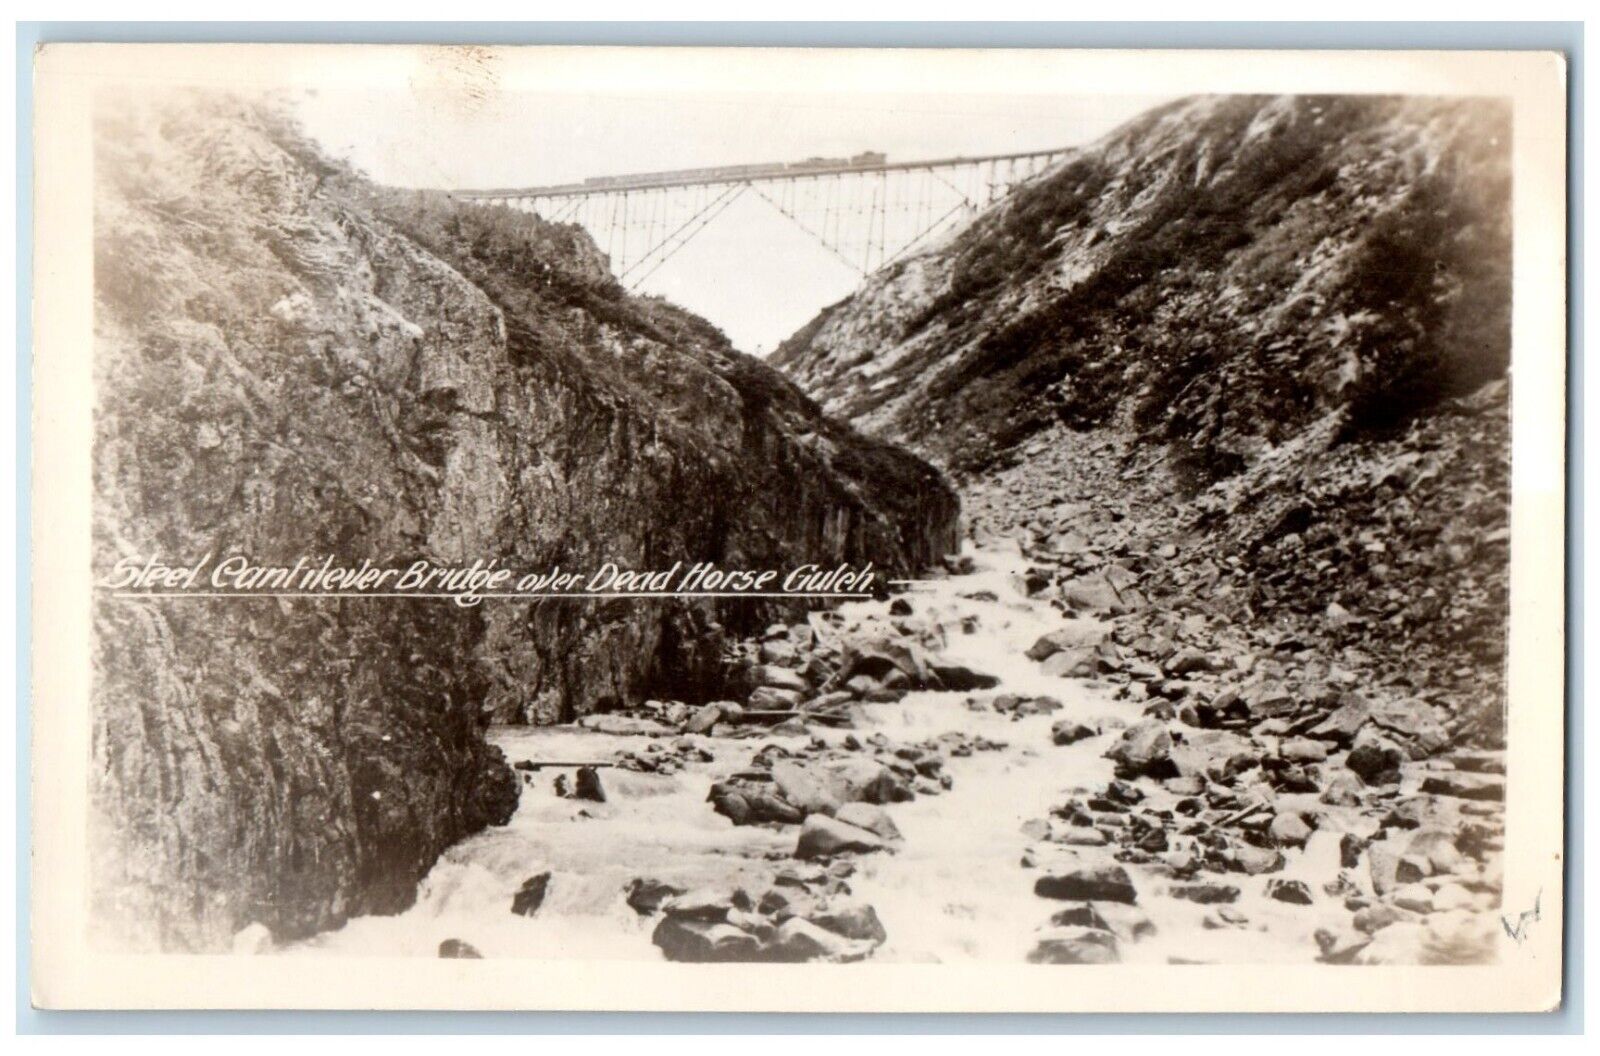 Steel Cantilever Bridge Dead Horse Gulch Train Yukon Alaska RPPC Photo Postcard